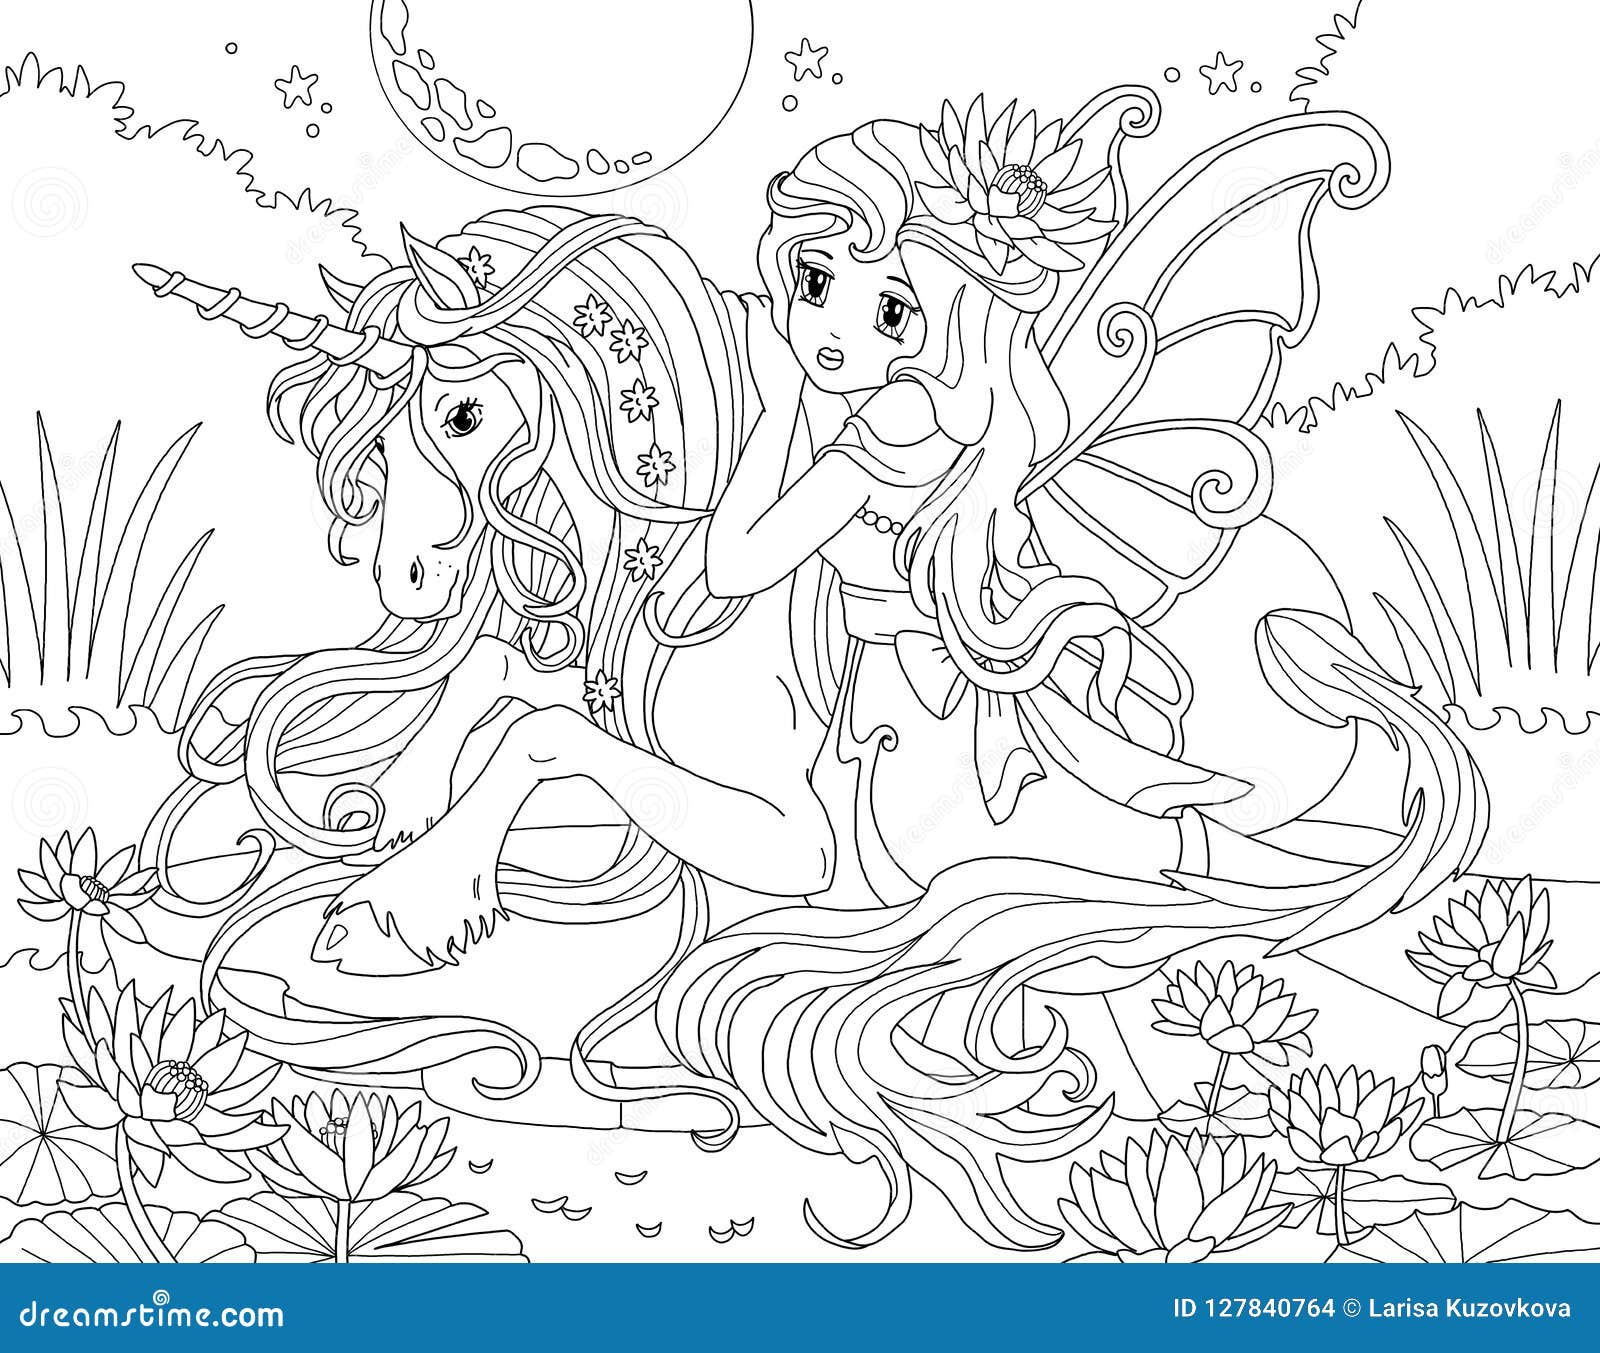 Unicorn Coloring Page Stock Illustrations – 20,0206 Unicorn Coloring ...